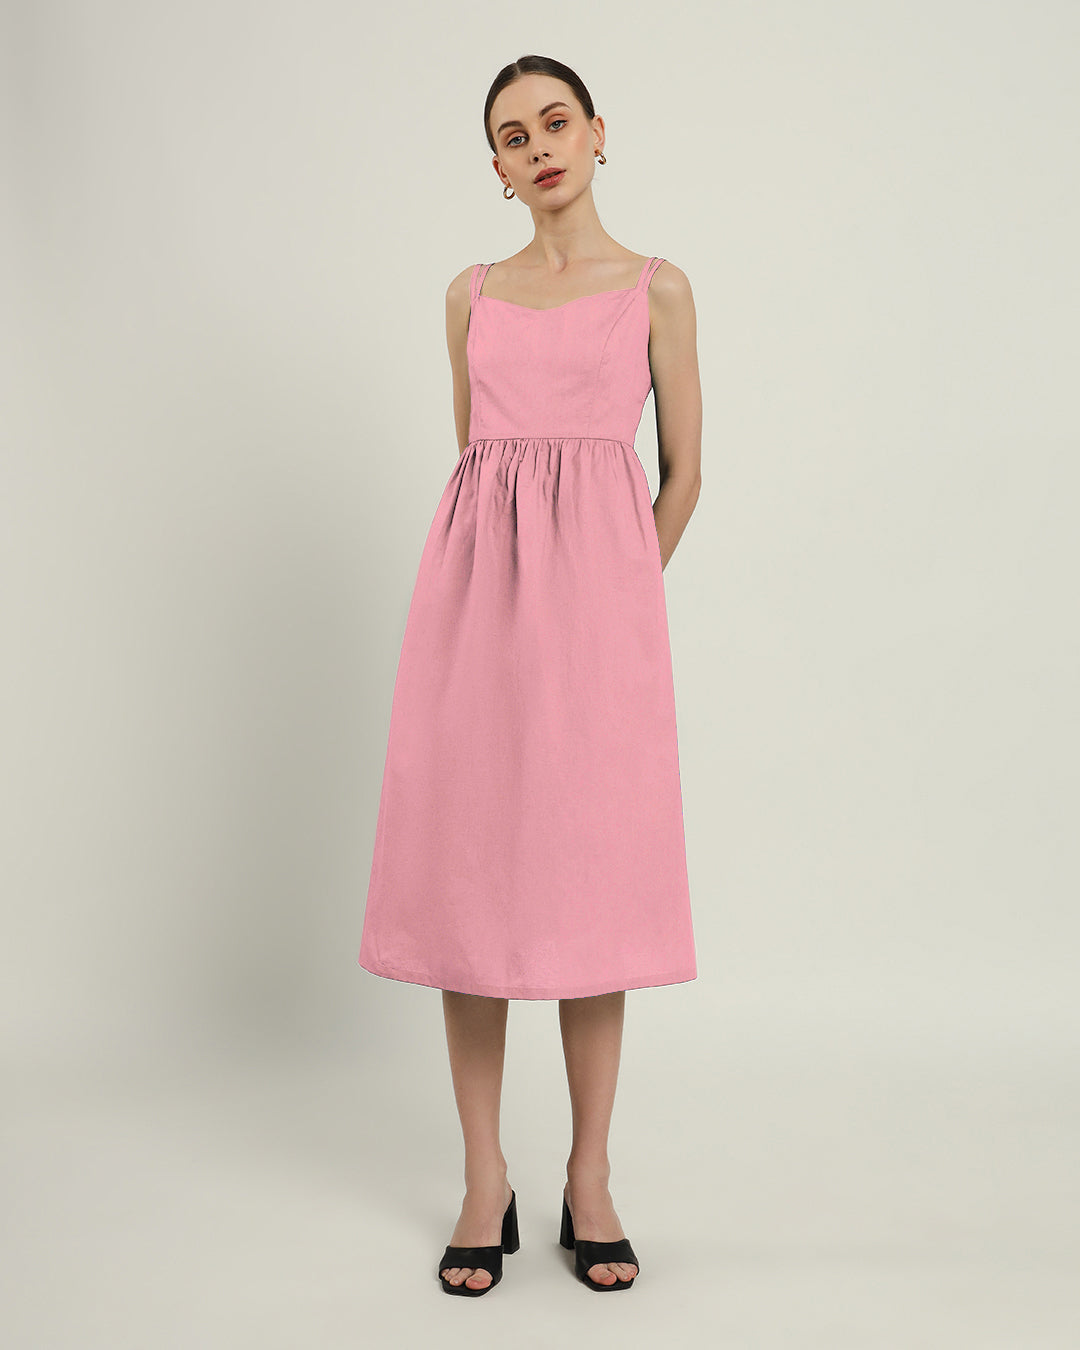 The Haiti Fondant Pink Dress